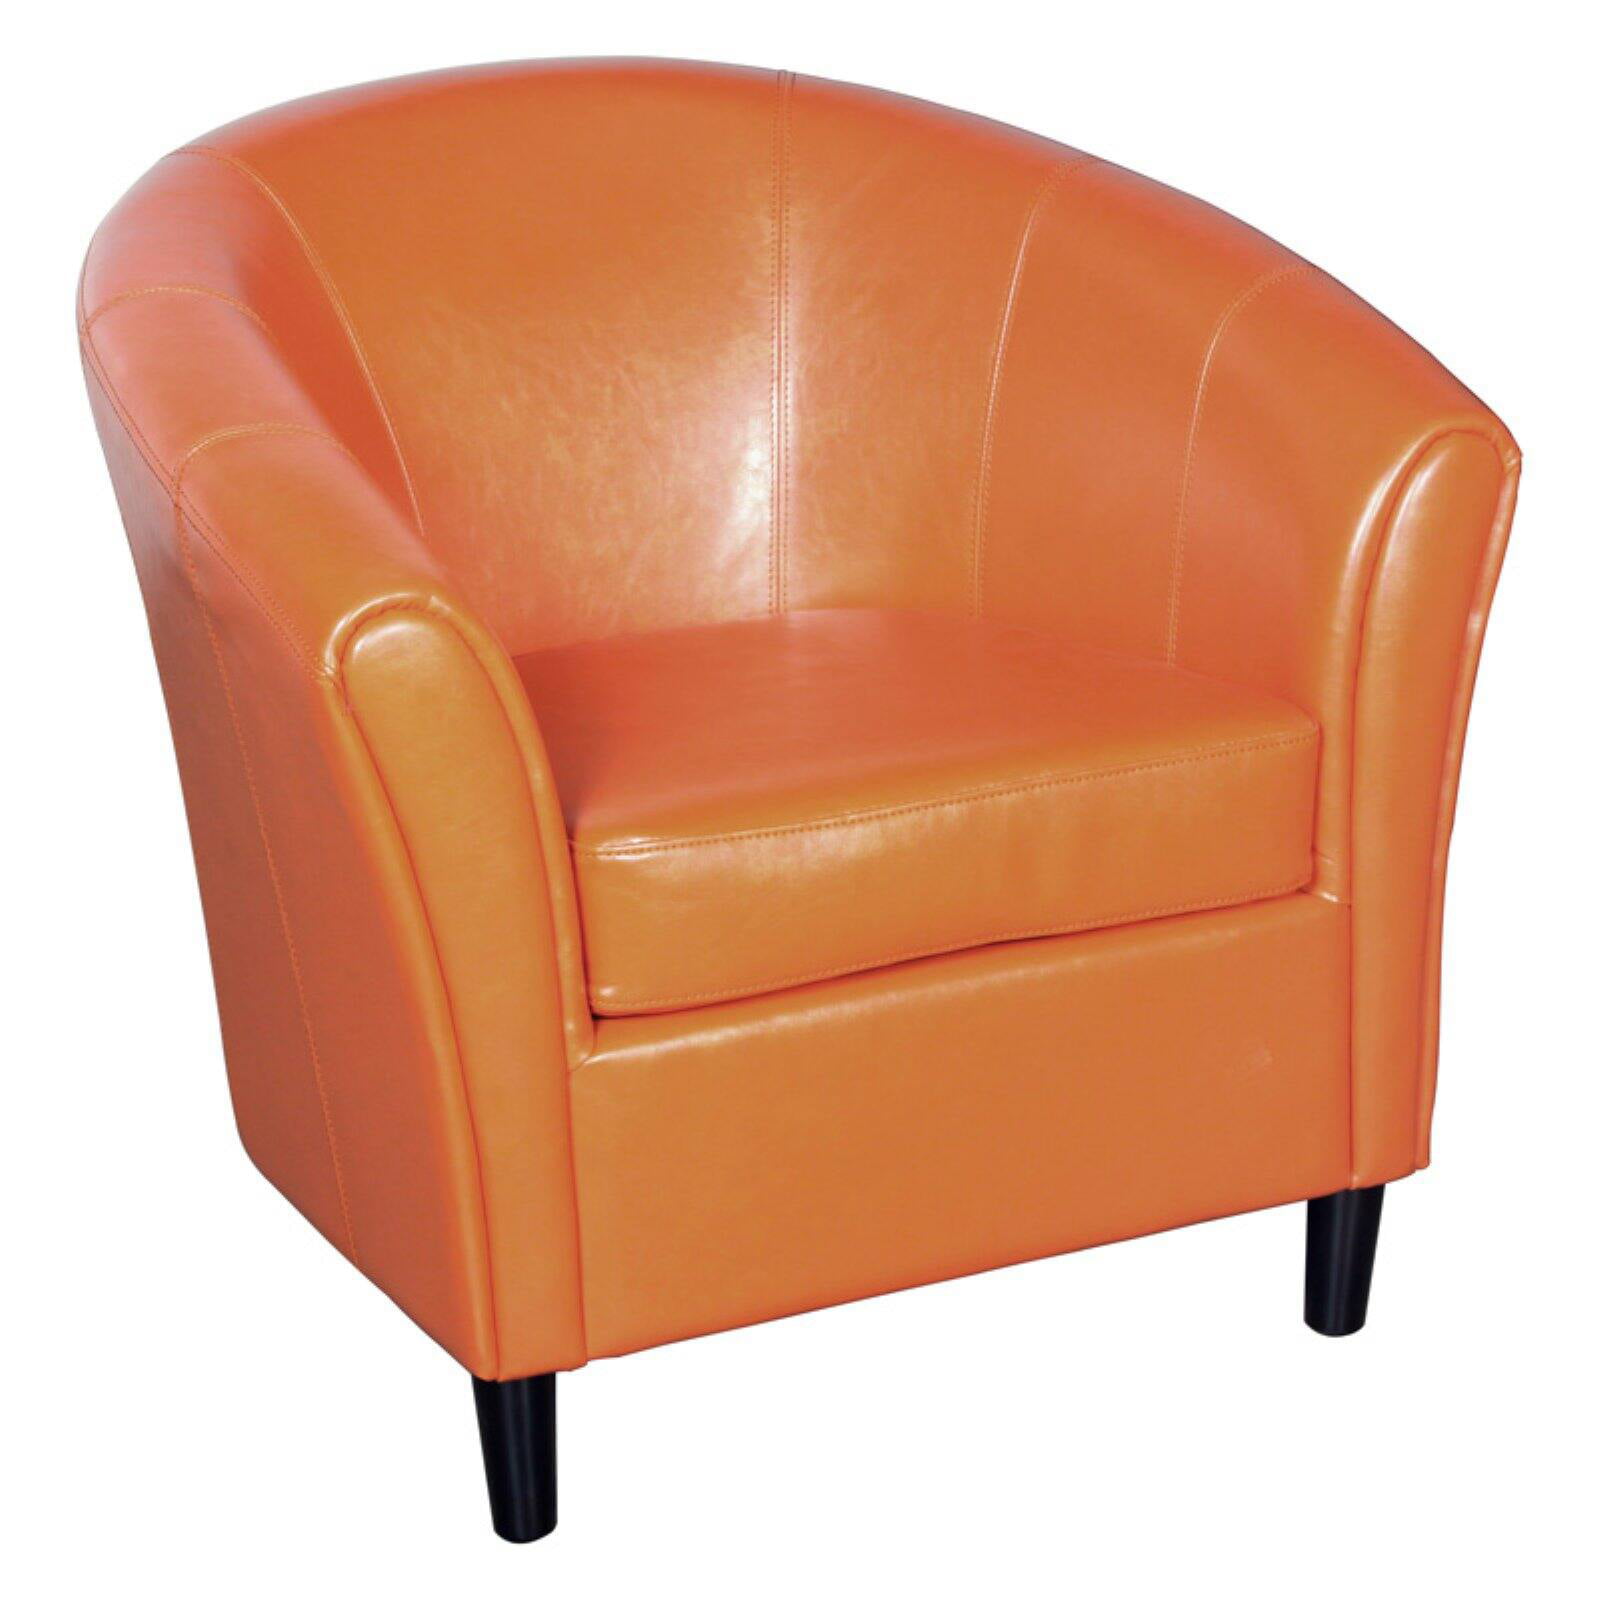 Napoli Orange Leather Club Chair, Leather Club Chairs Ikea